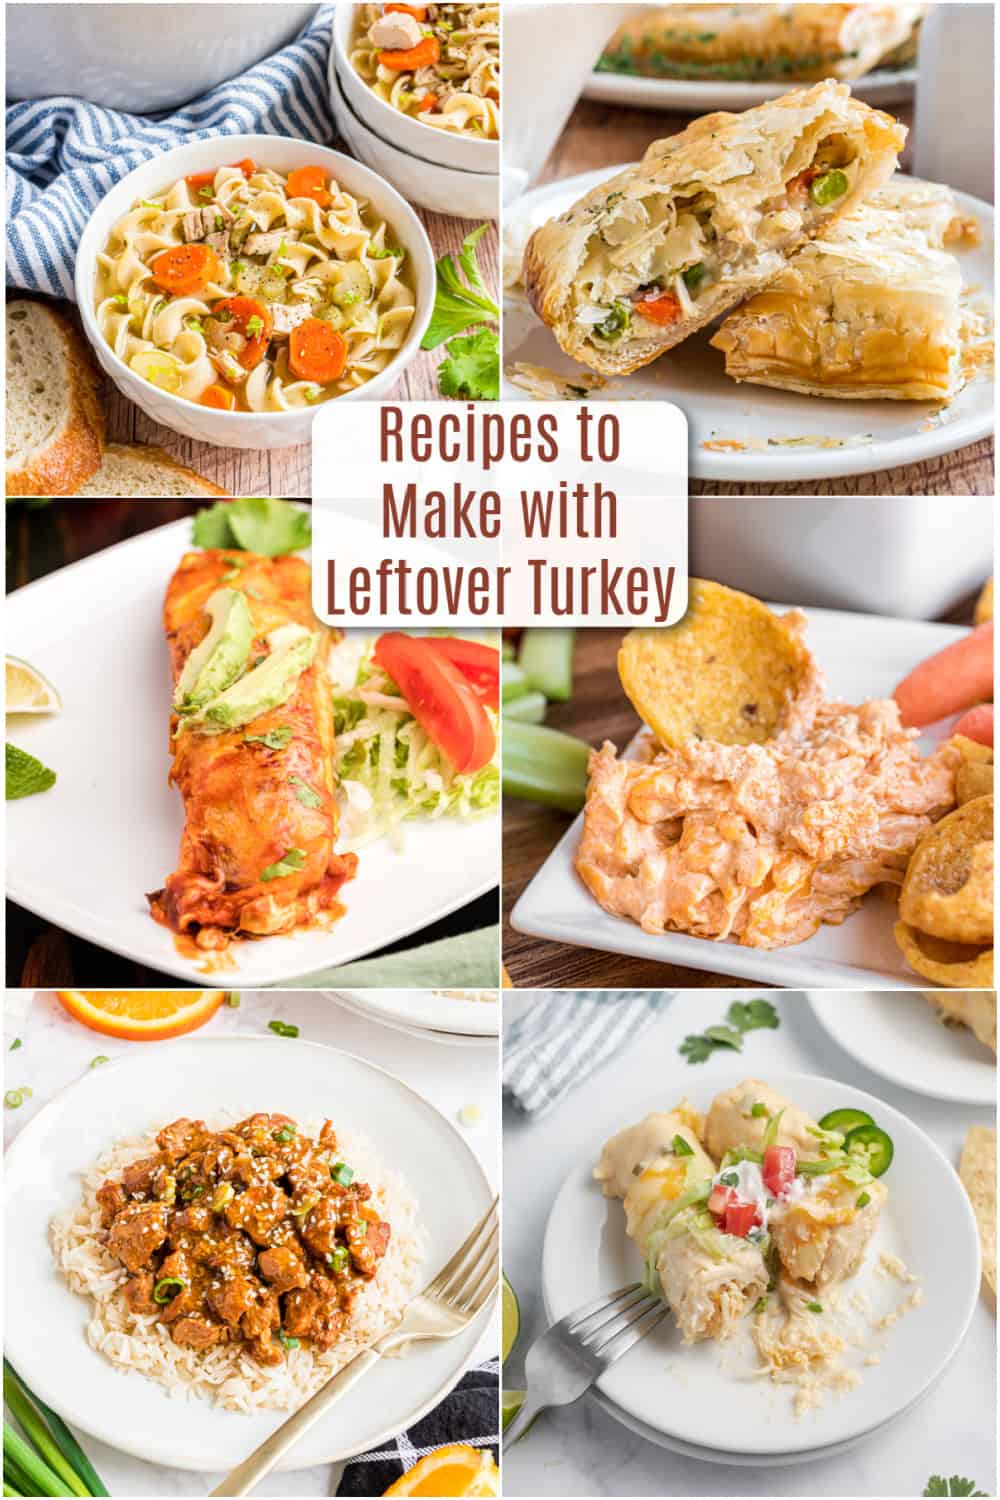 https://www.shugarysweets.com/wp-content/uploads/2013/11/Leftover-Turkey-Recipes-pinterest.jpg